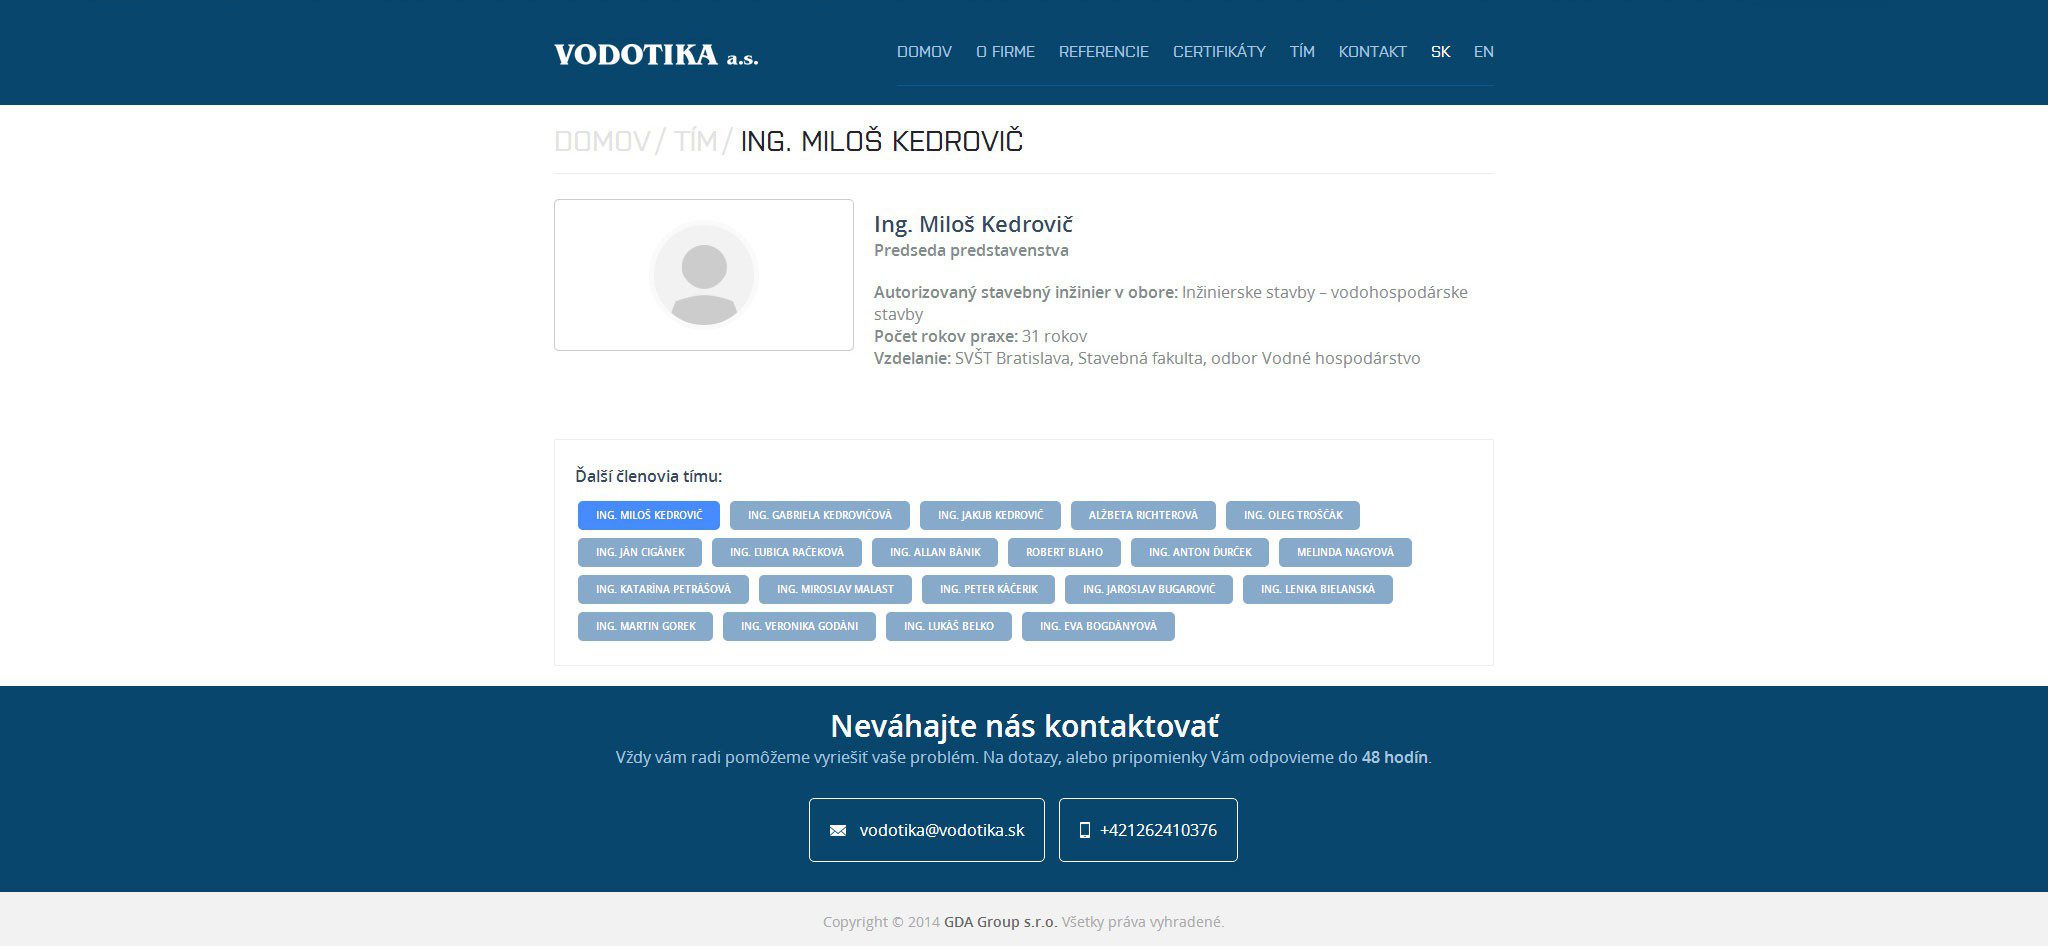 Web development - VODOTIKA, a.s. - Member detail